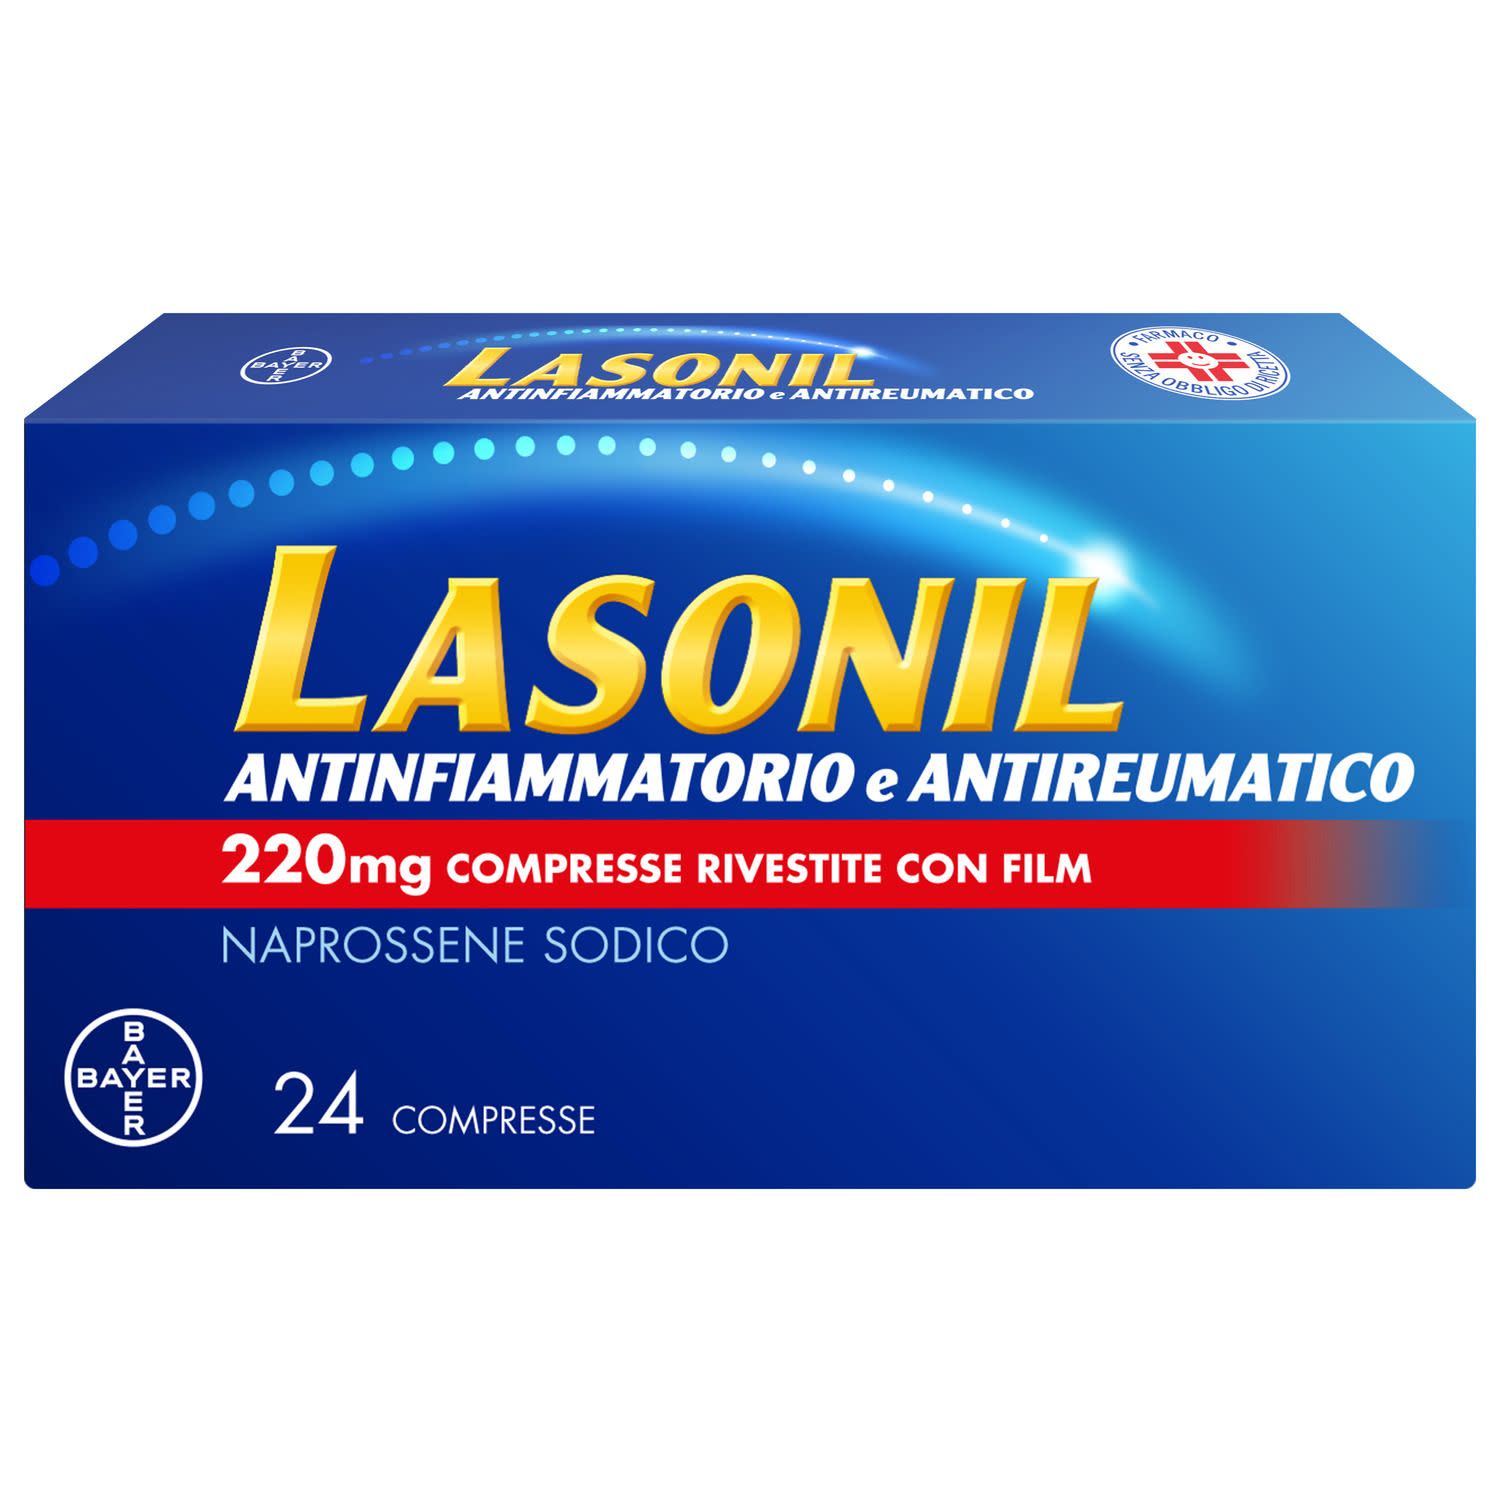 032790040 - LASONIL ANTINFIAMMATORIO E ANTIREUMATICO*24 cpr riv 220 mg - 7865632_1.jpg